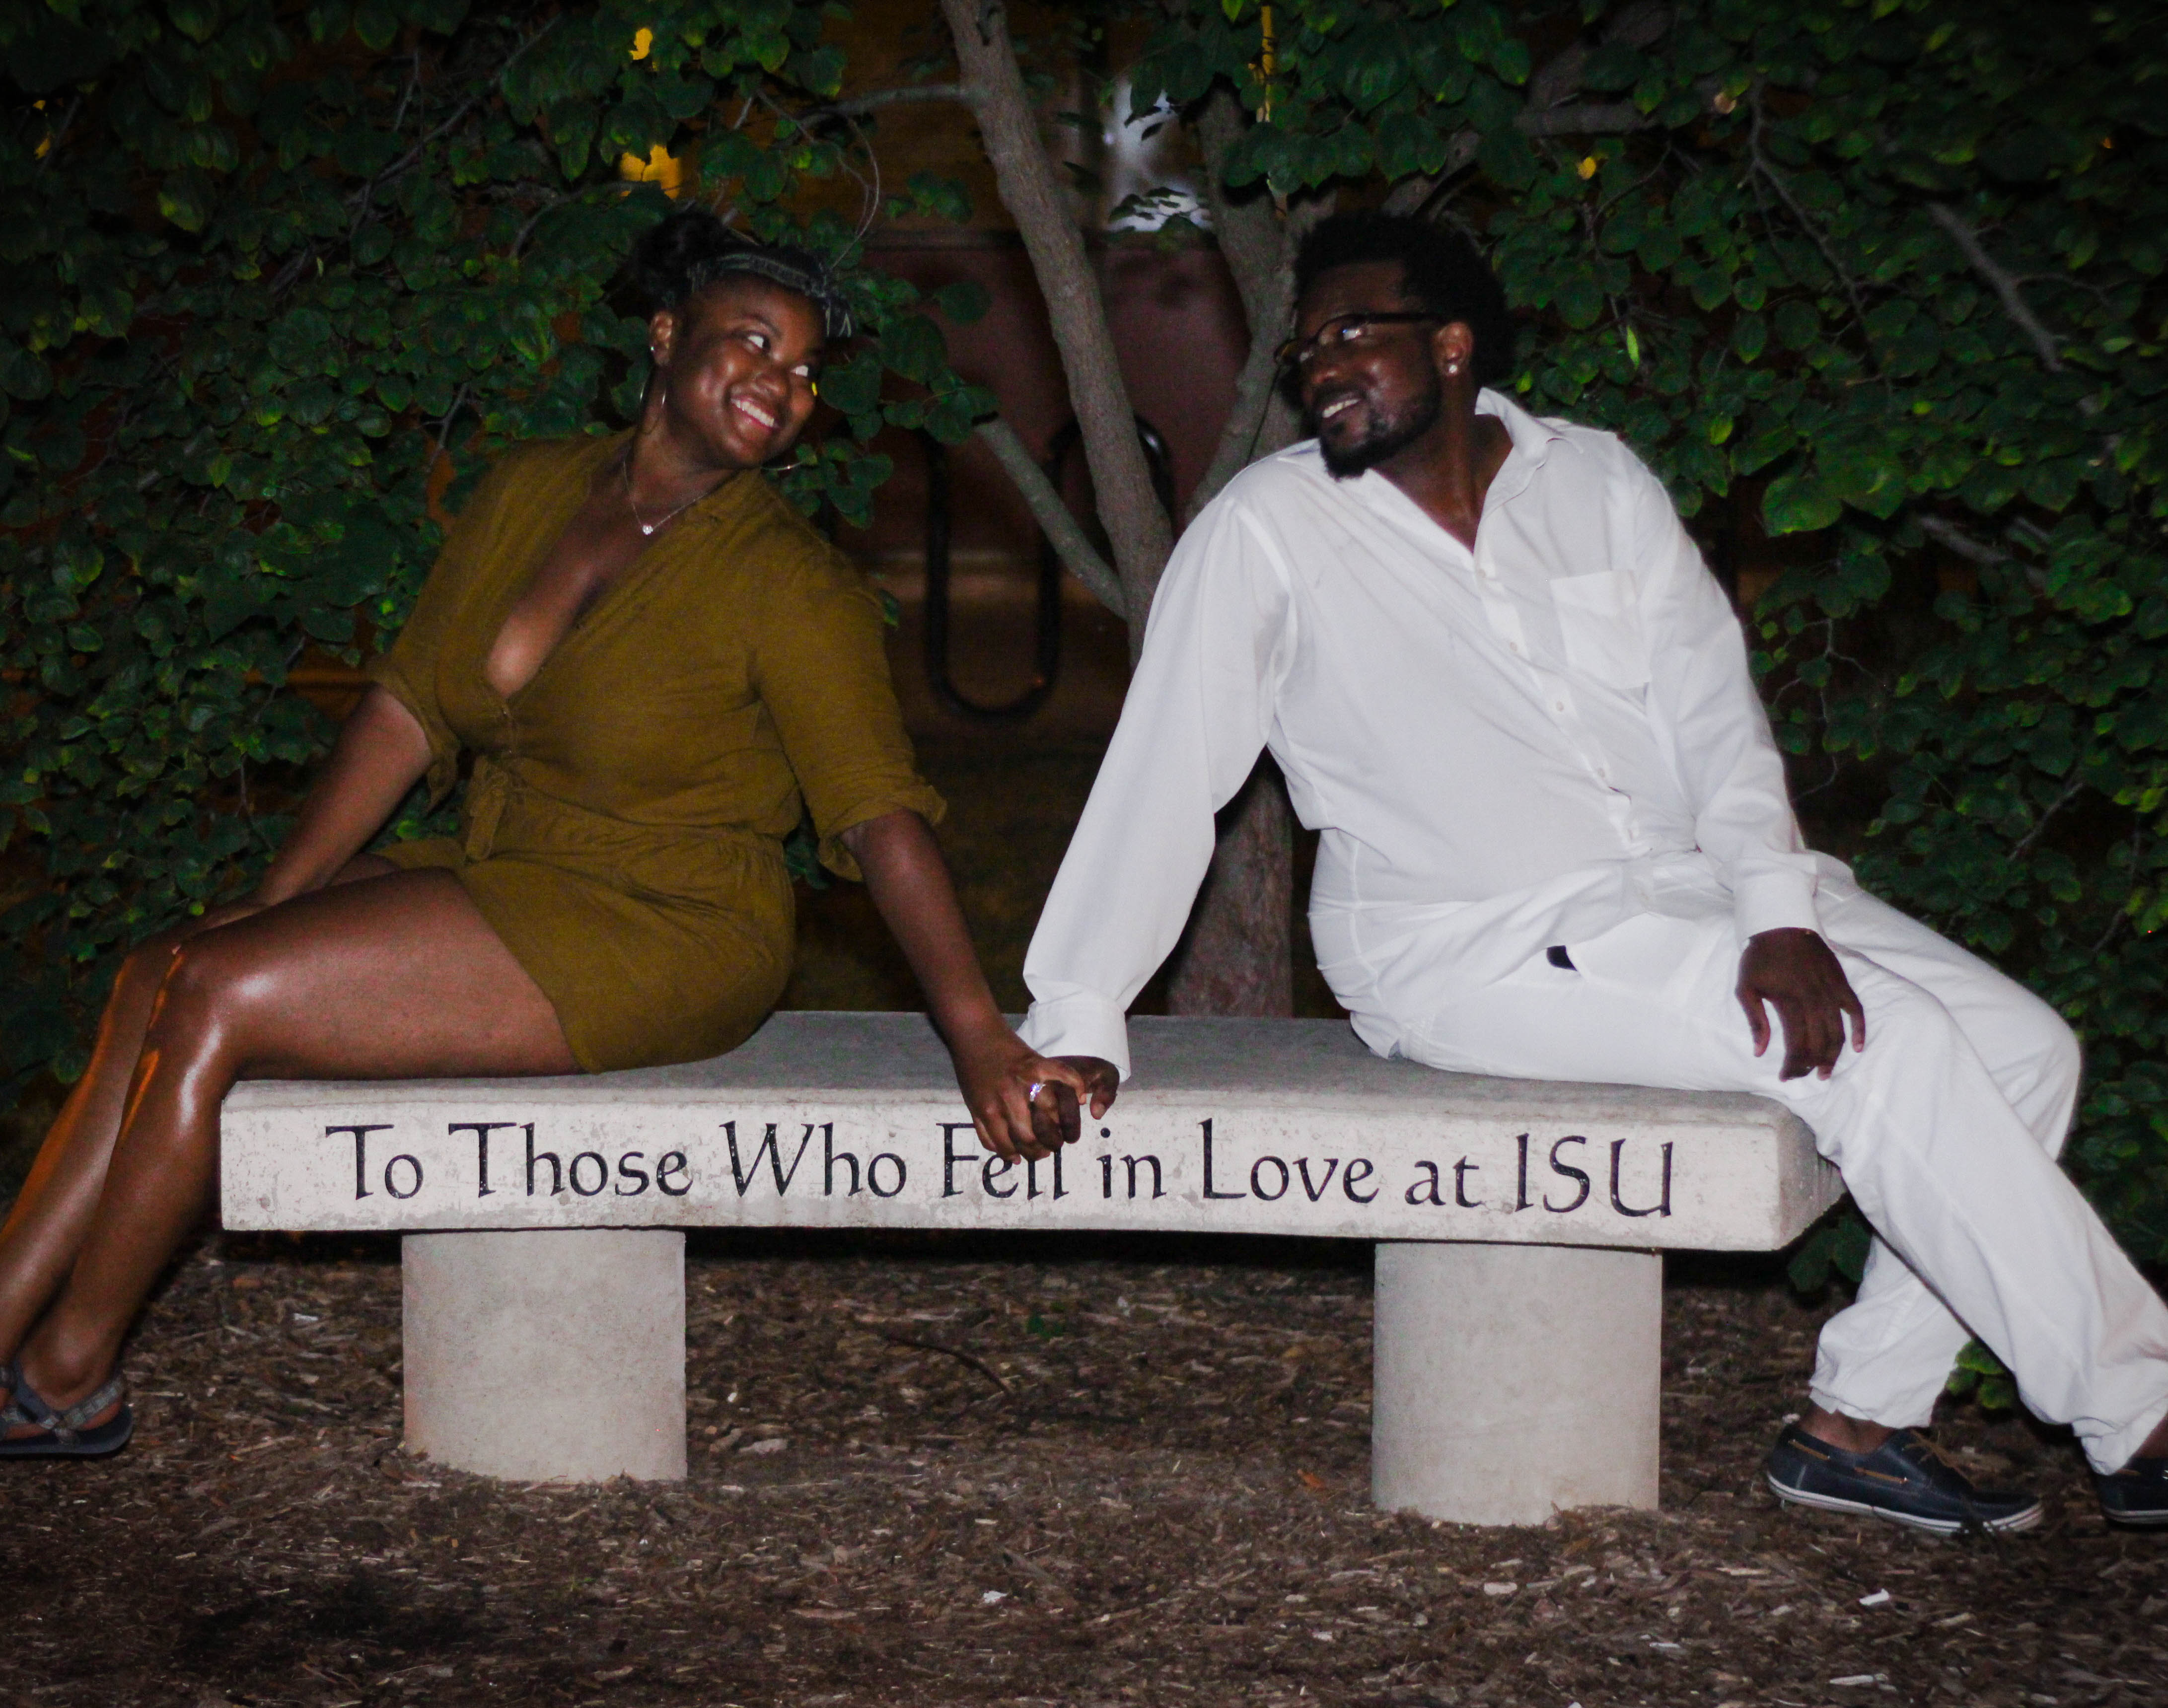 Shaunda Brooks and fiance Joseph Green on the love bench